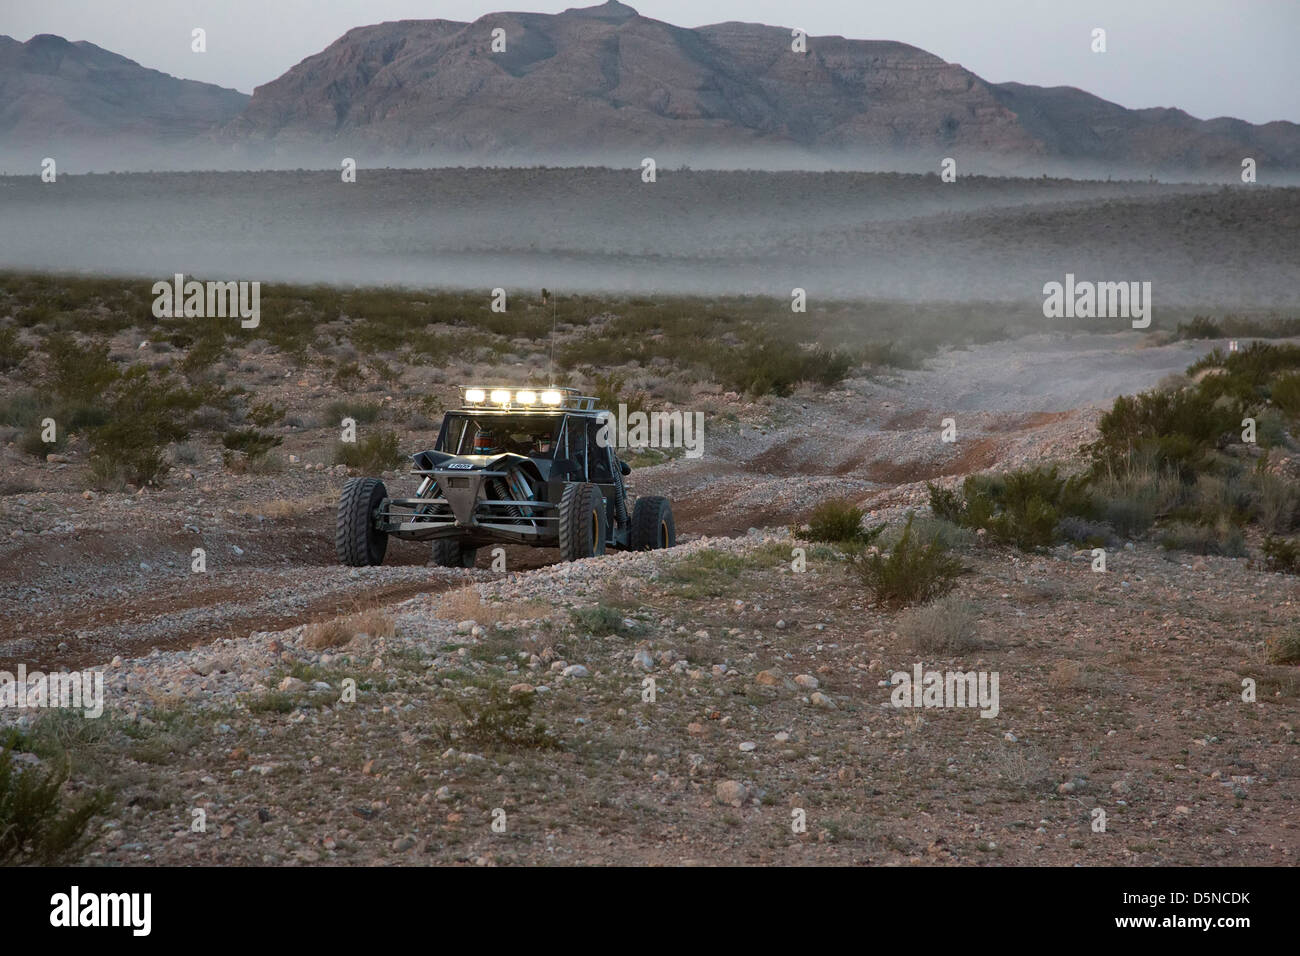 Jean, Nevada - The Mint 400 off-road auto race through the Mojave Desert near Las Vegas. Stock Photo